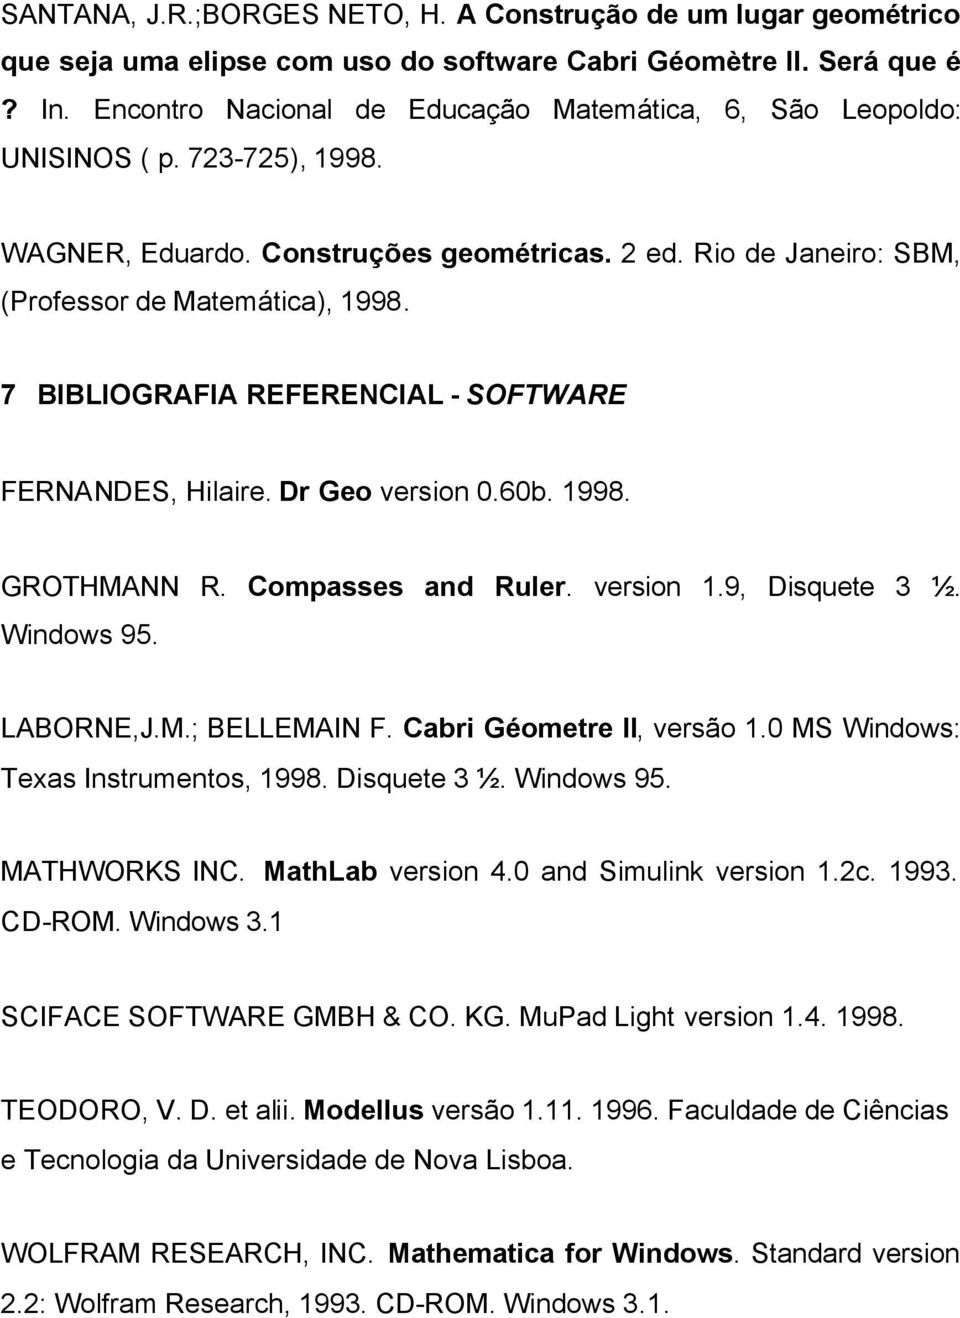 7 BIBLIOGRAFIA REFERENCIAL - SOFTWARE FERNANDES, Hilaire. Dr Geo version 0.60b. 1998. GROTHMANN R. Compasses and Ruler. version 1.9, Disquete 3 ½. Windows 95. LABORNE,J.M.; BELLEMAIN F.